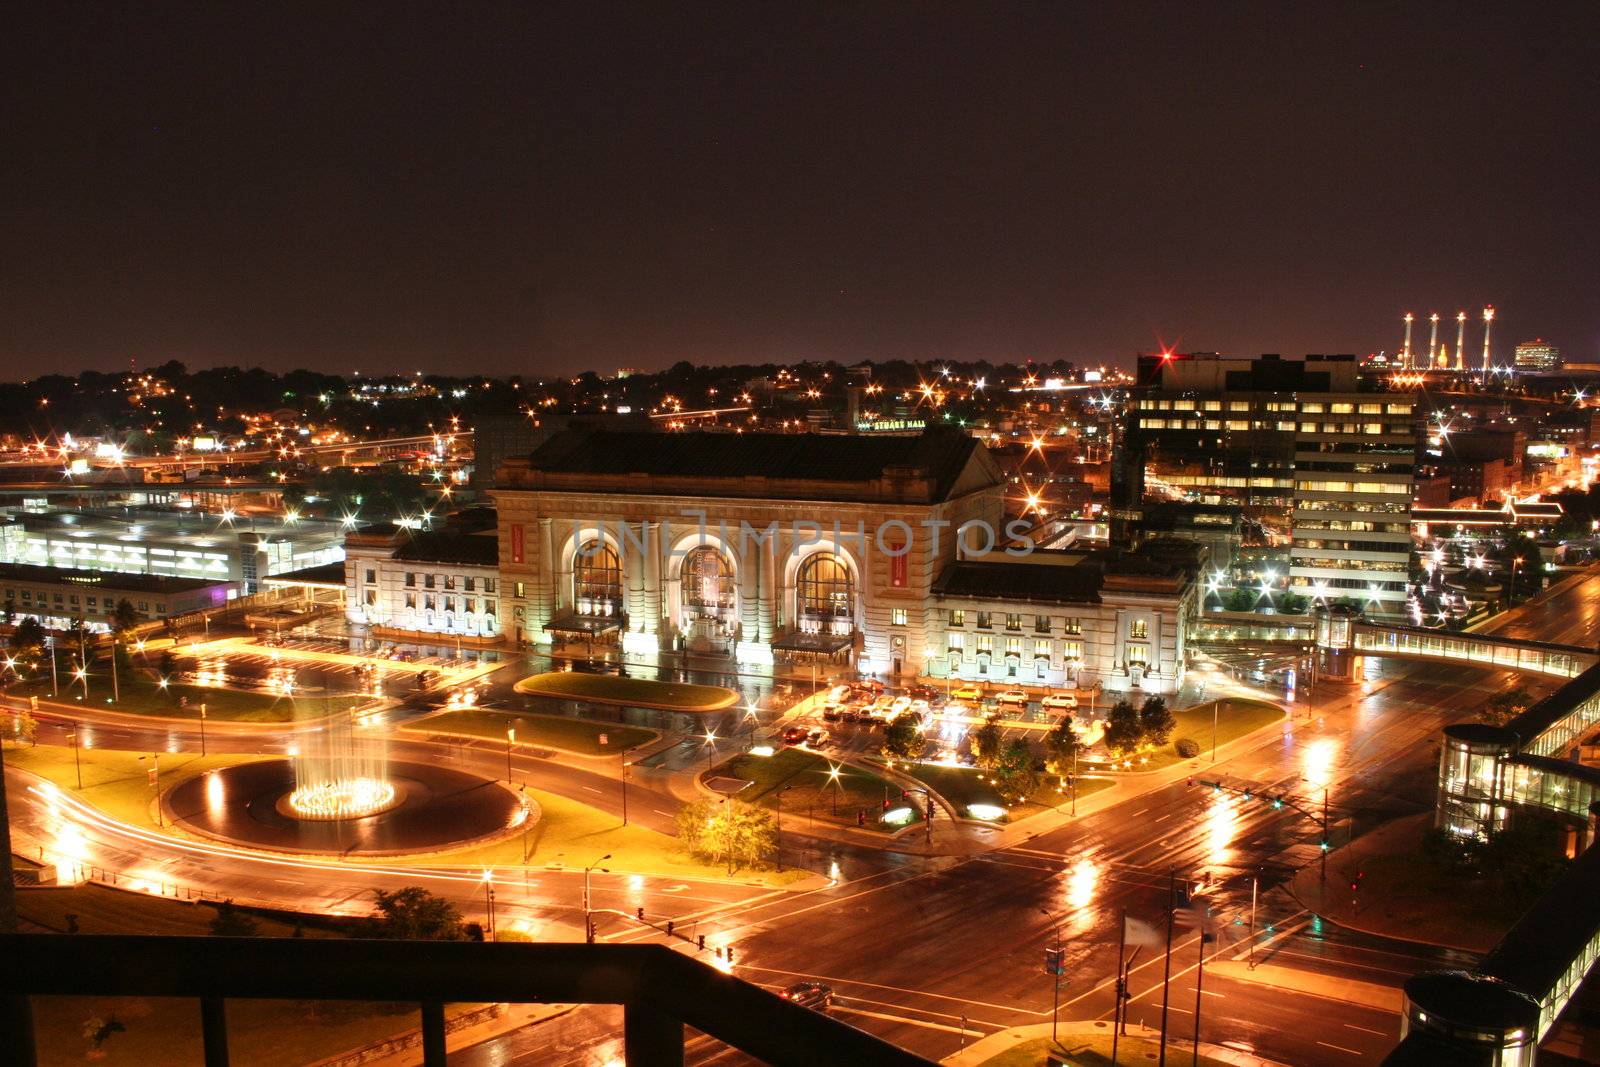 Kansas City Union Station at night after a rain